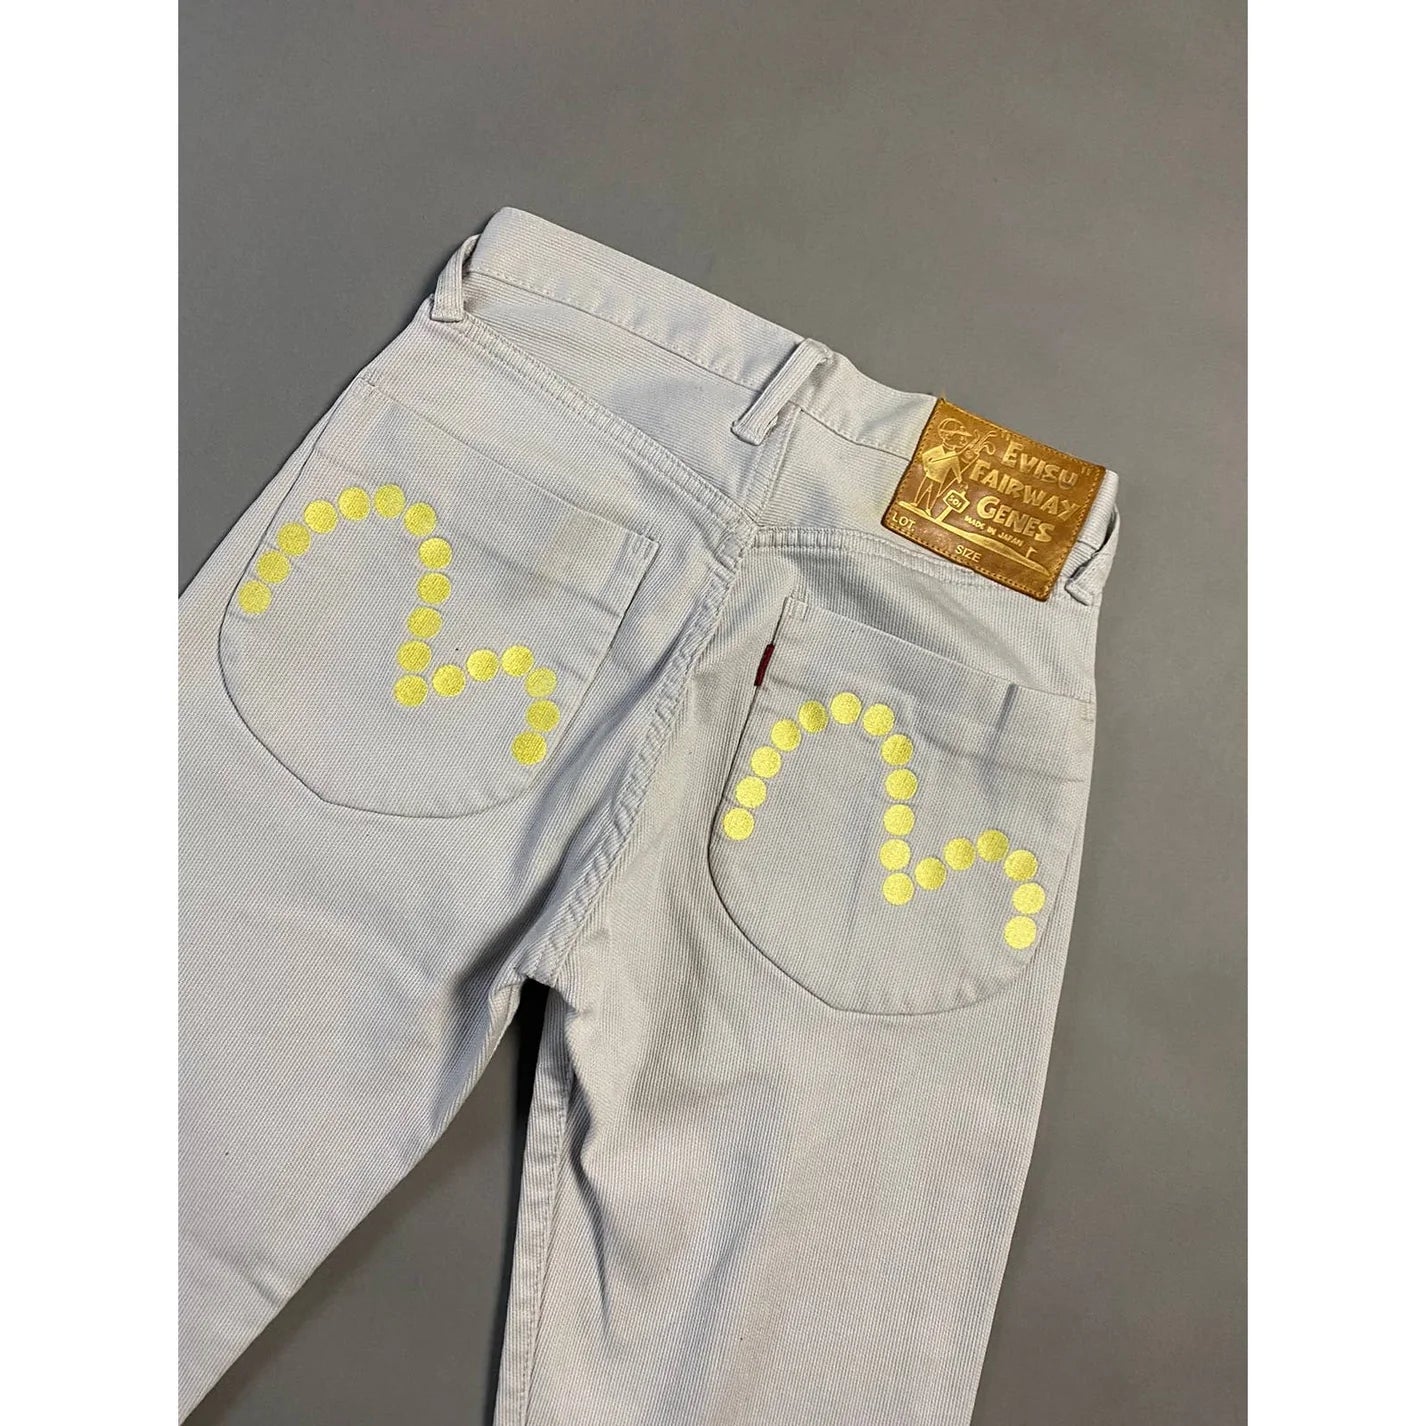 Evisu Fairway Genes Vintage Grey Chino Pants Gold Dots Logo Lodz Polska tyl2